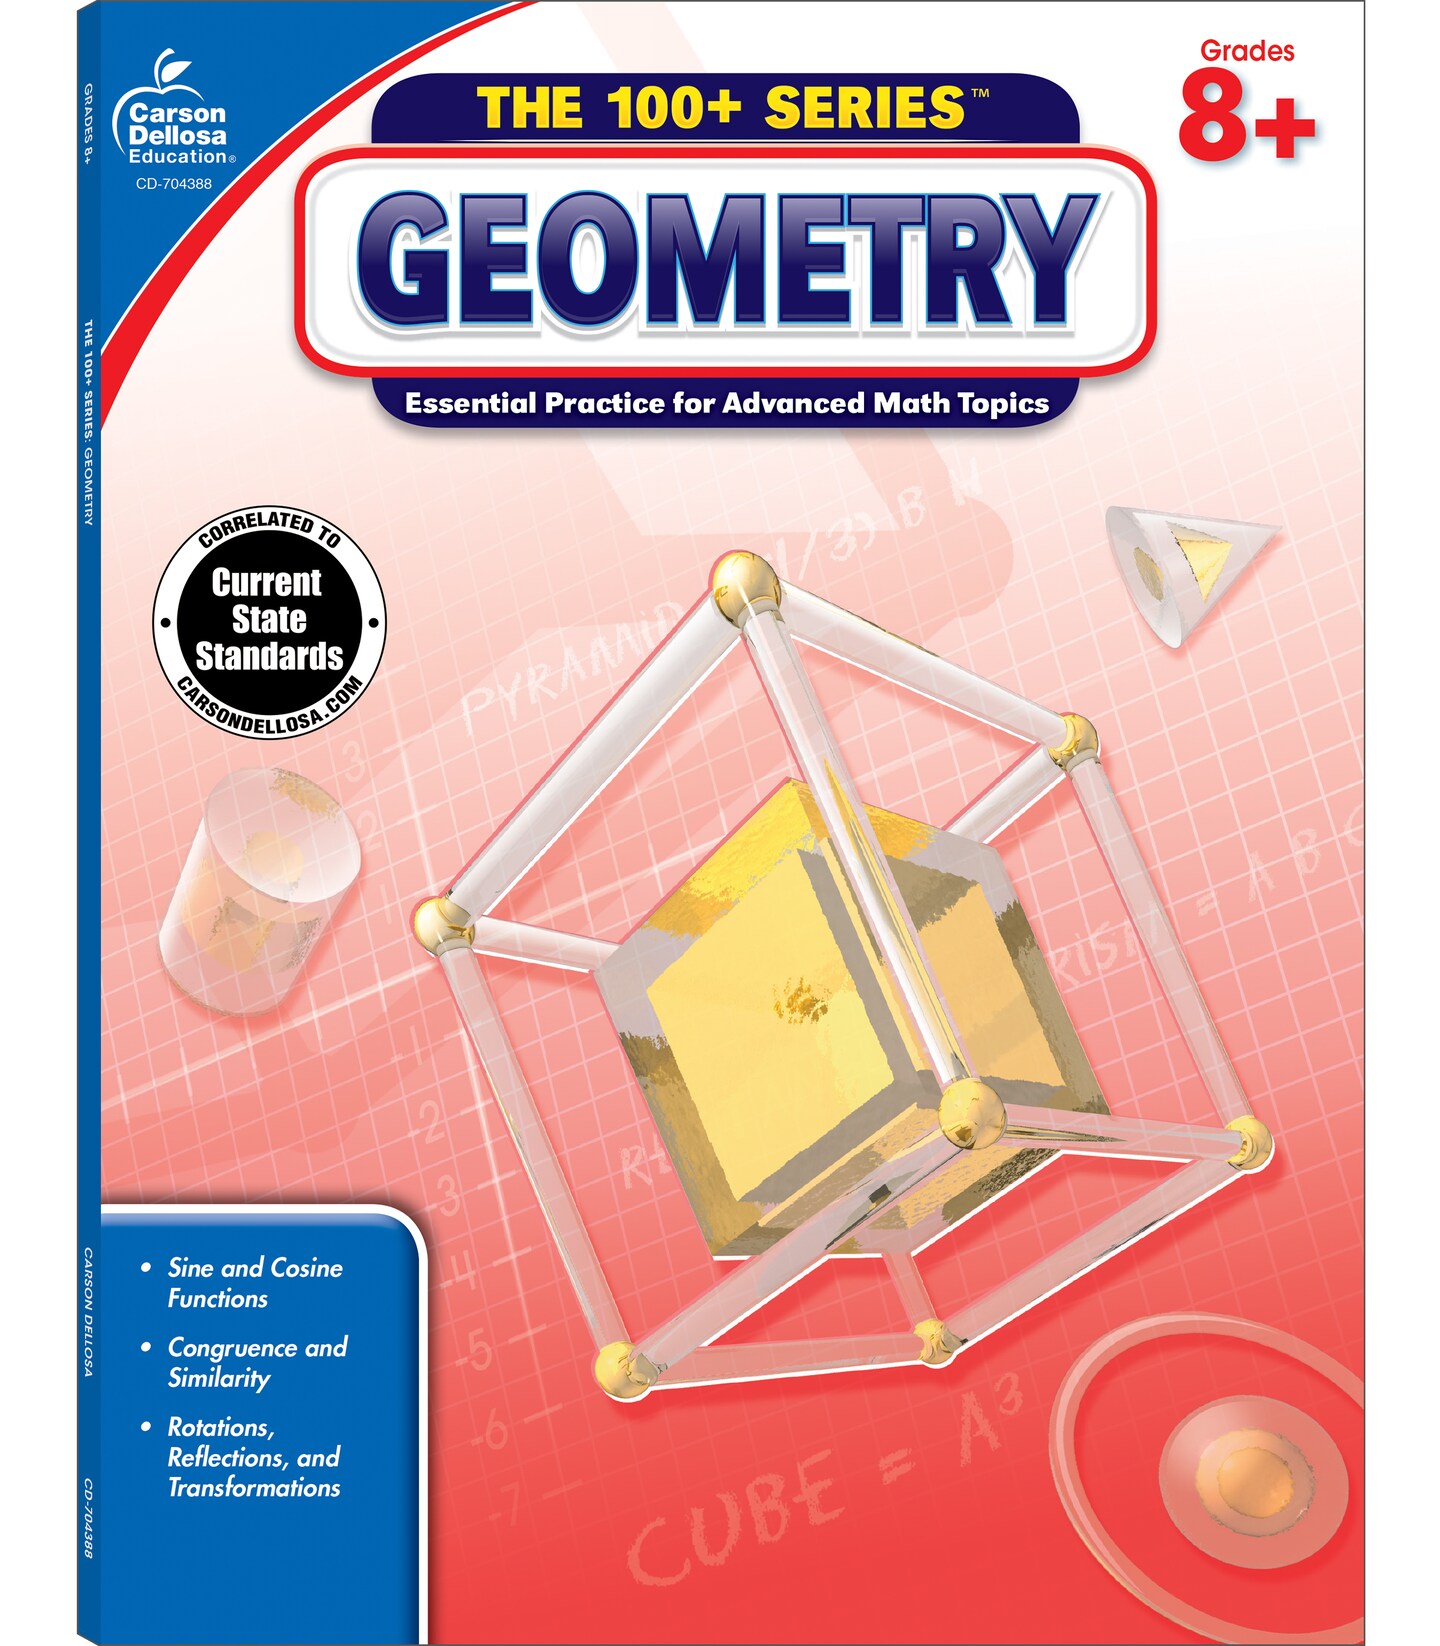 Carson Dellosa The 100+ Series: Grades 6-12 Geometry Workbook, Geometry Equations, Trigonometry &#x26; More, Middle School and  High School Math Geometry Workbook, Math Classroom or Homeschool Curriculum